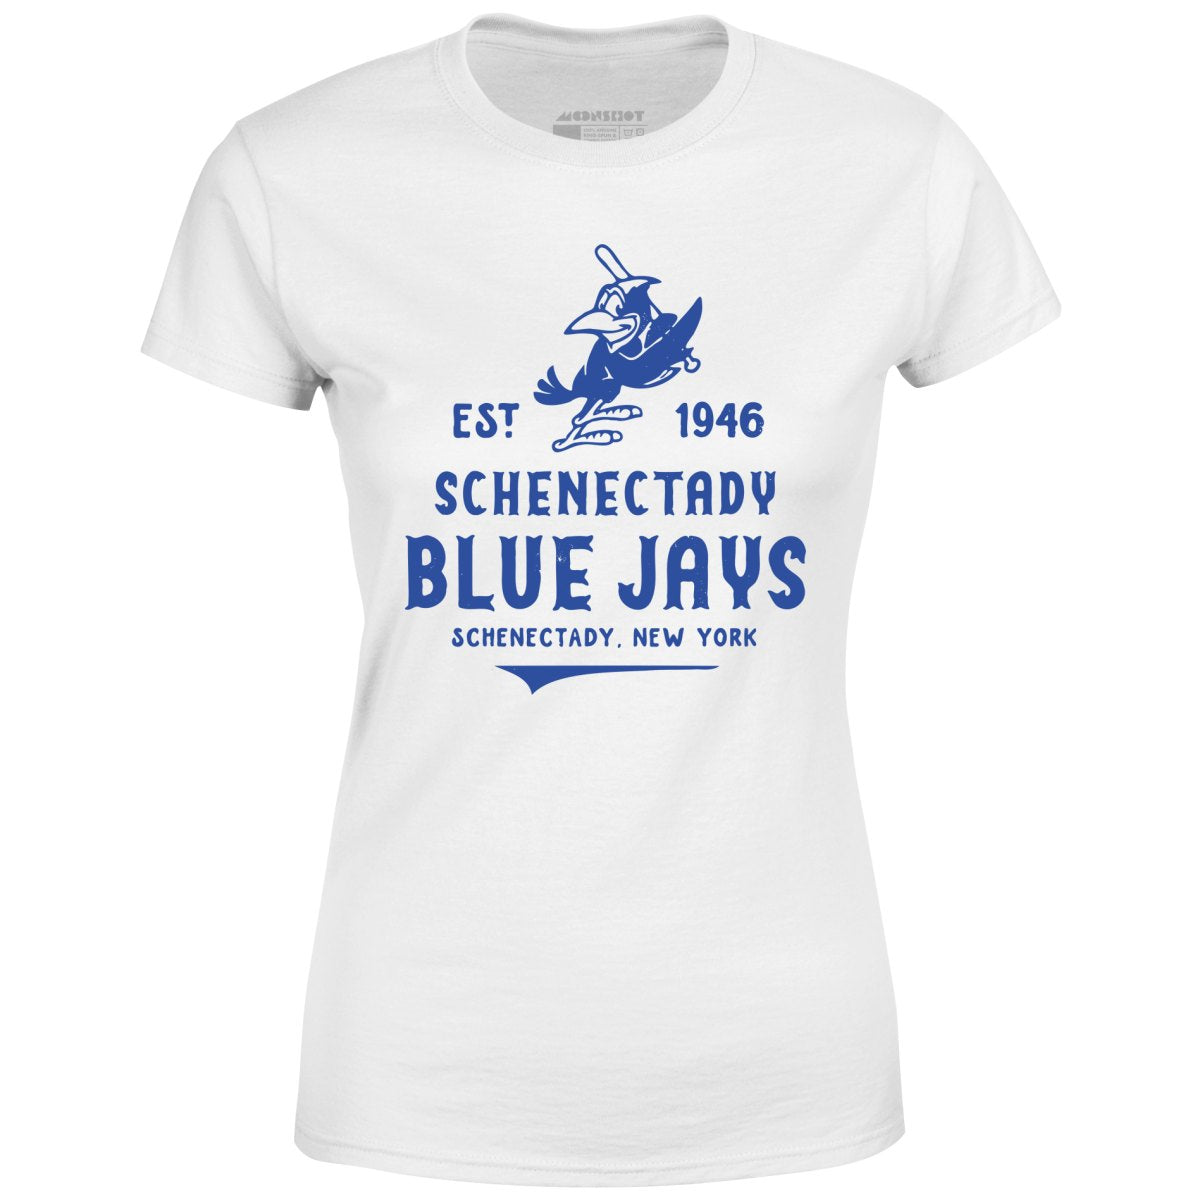 Schenectady Blue Jays - New York - Vintage Defunct Baseball Teams - Women's T-Shirt